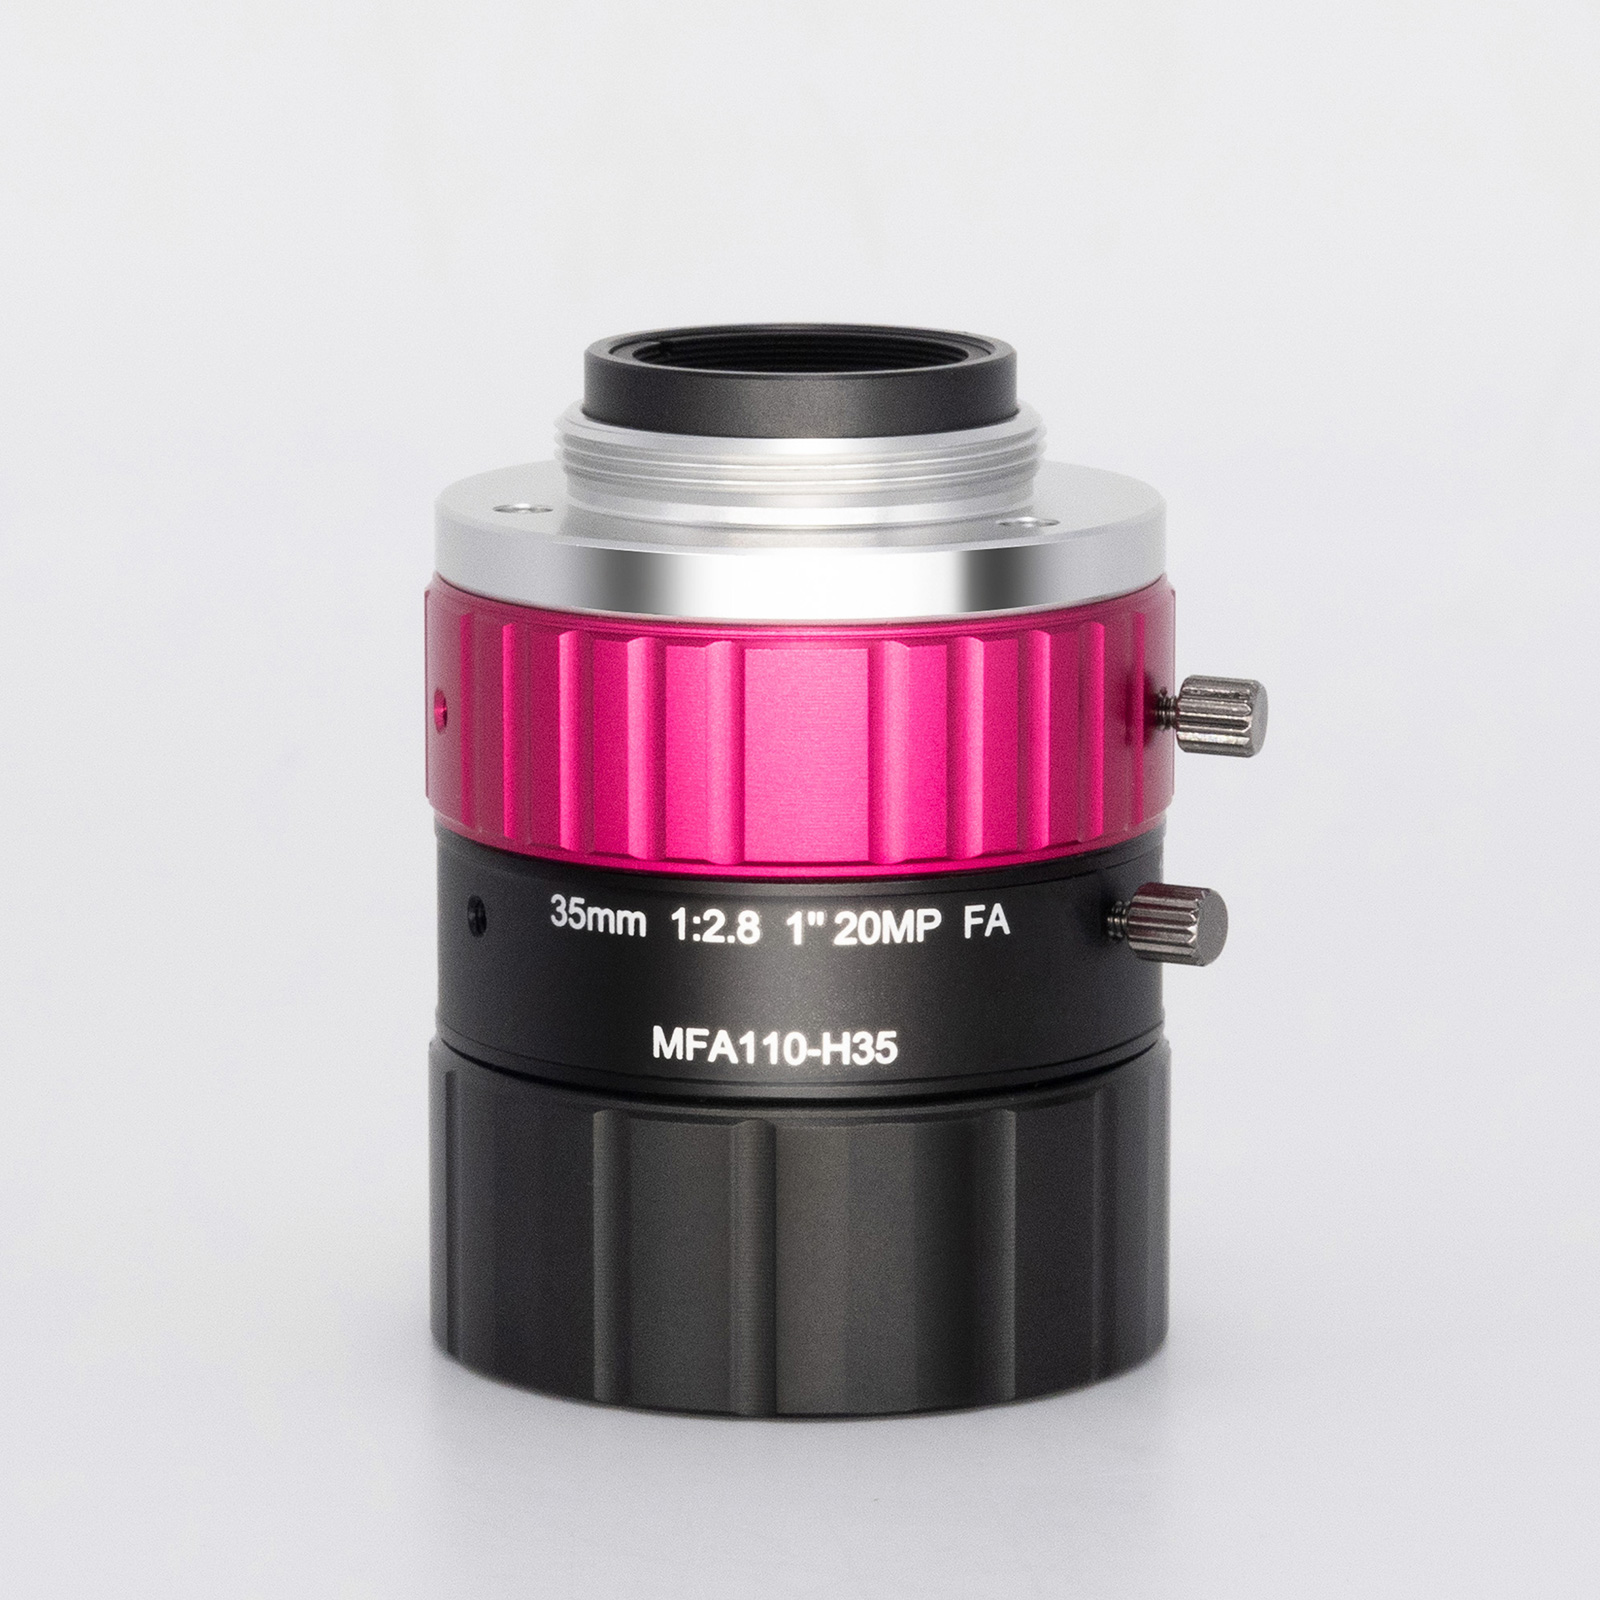 1" f35 Fixed Focus Lens